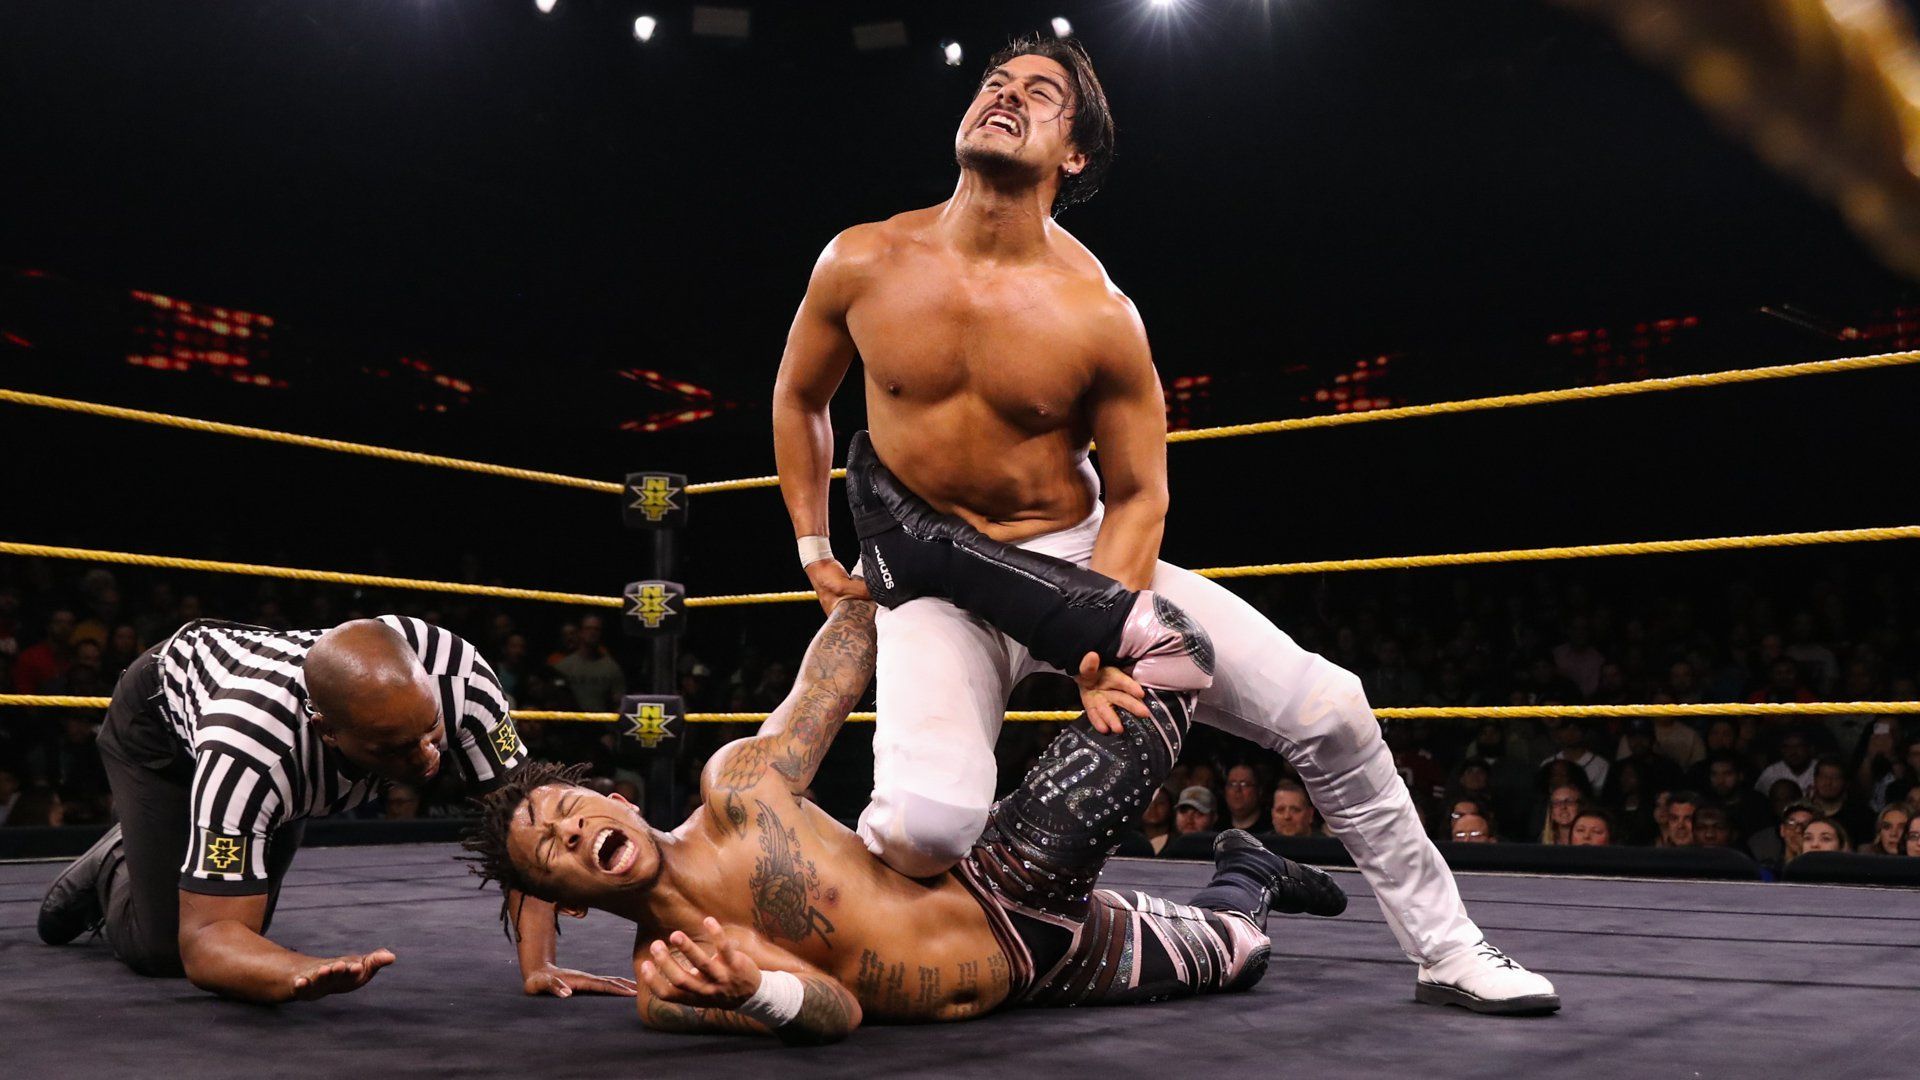 Lio Rush to become the new NXT Cruiserweight Champion.